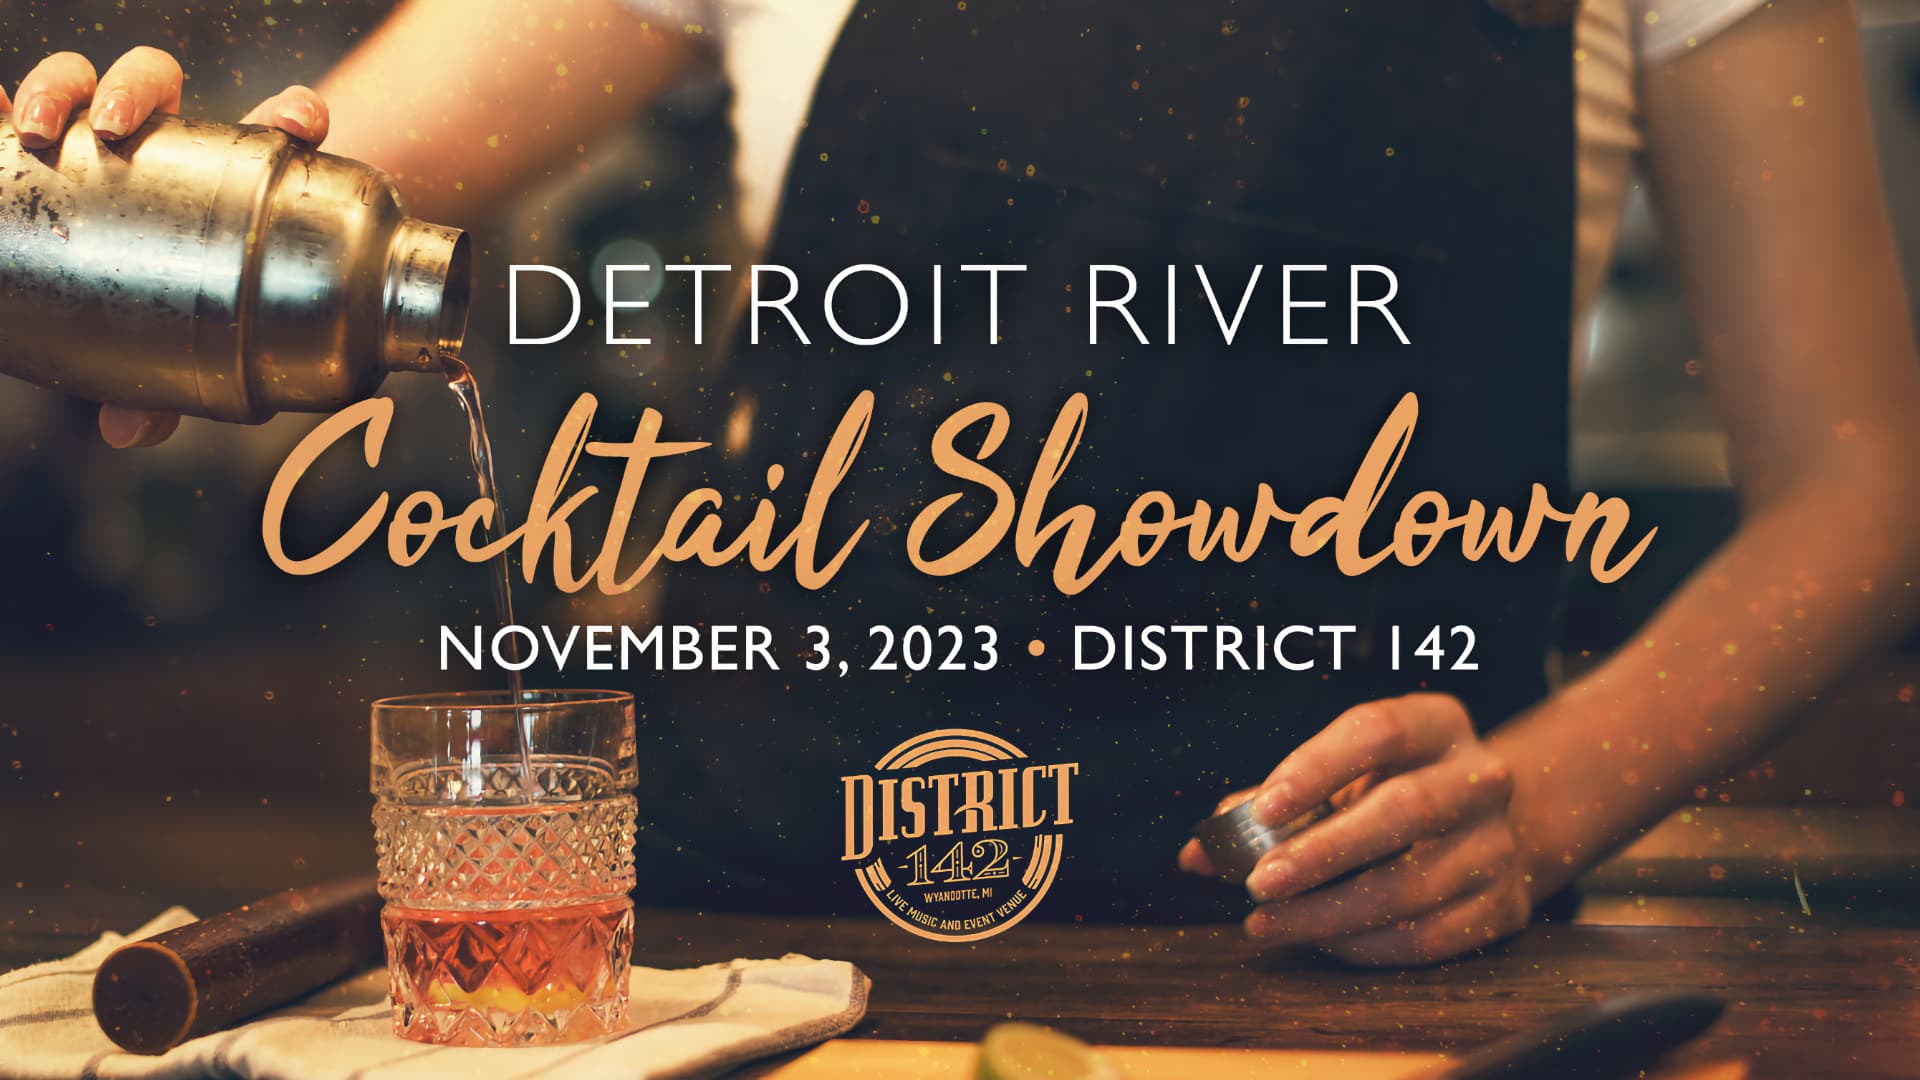 Detroit River Cocktail Showdown on November 3, 2023 at District 142